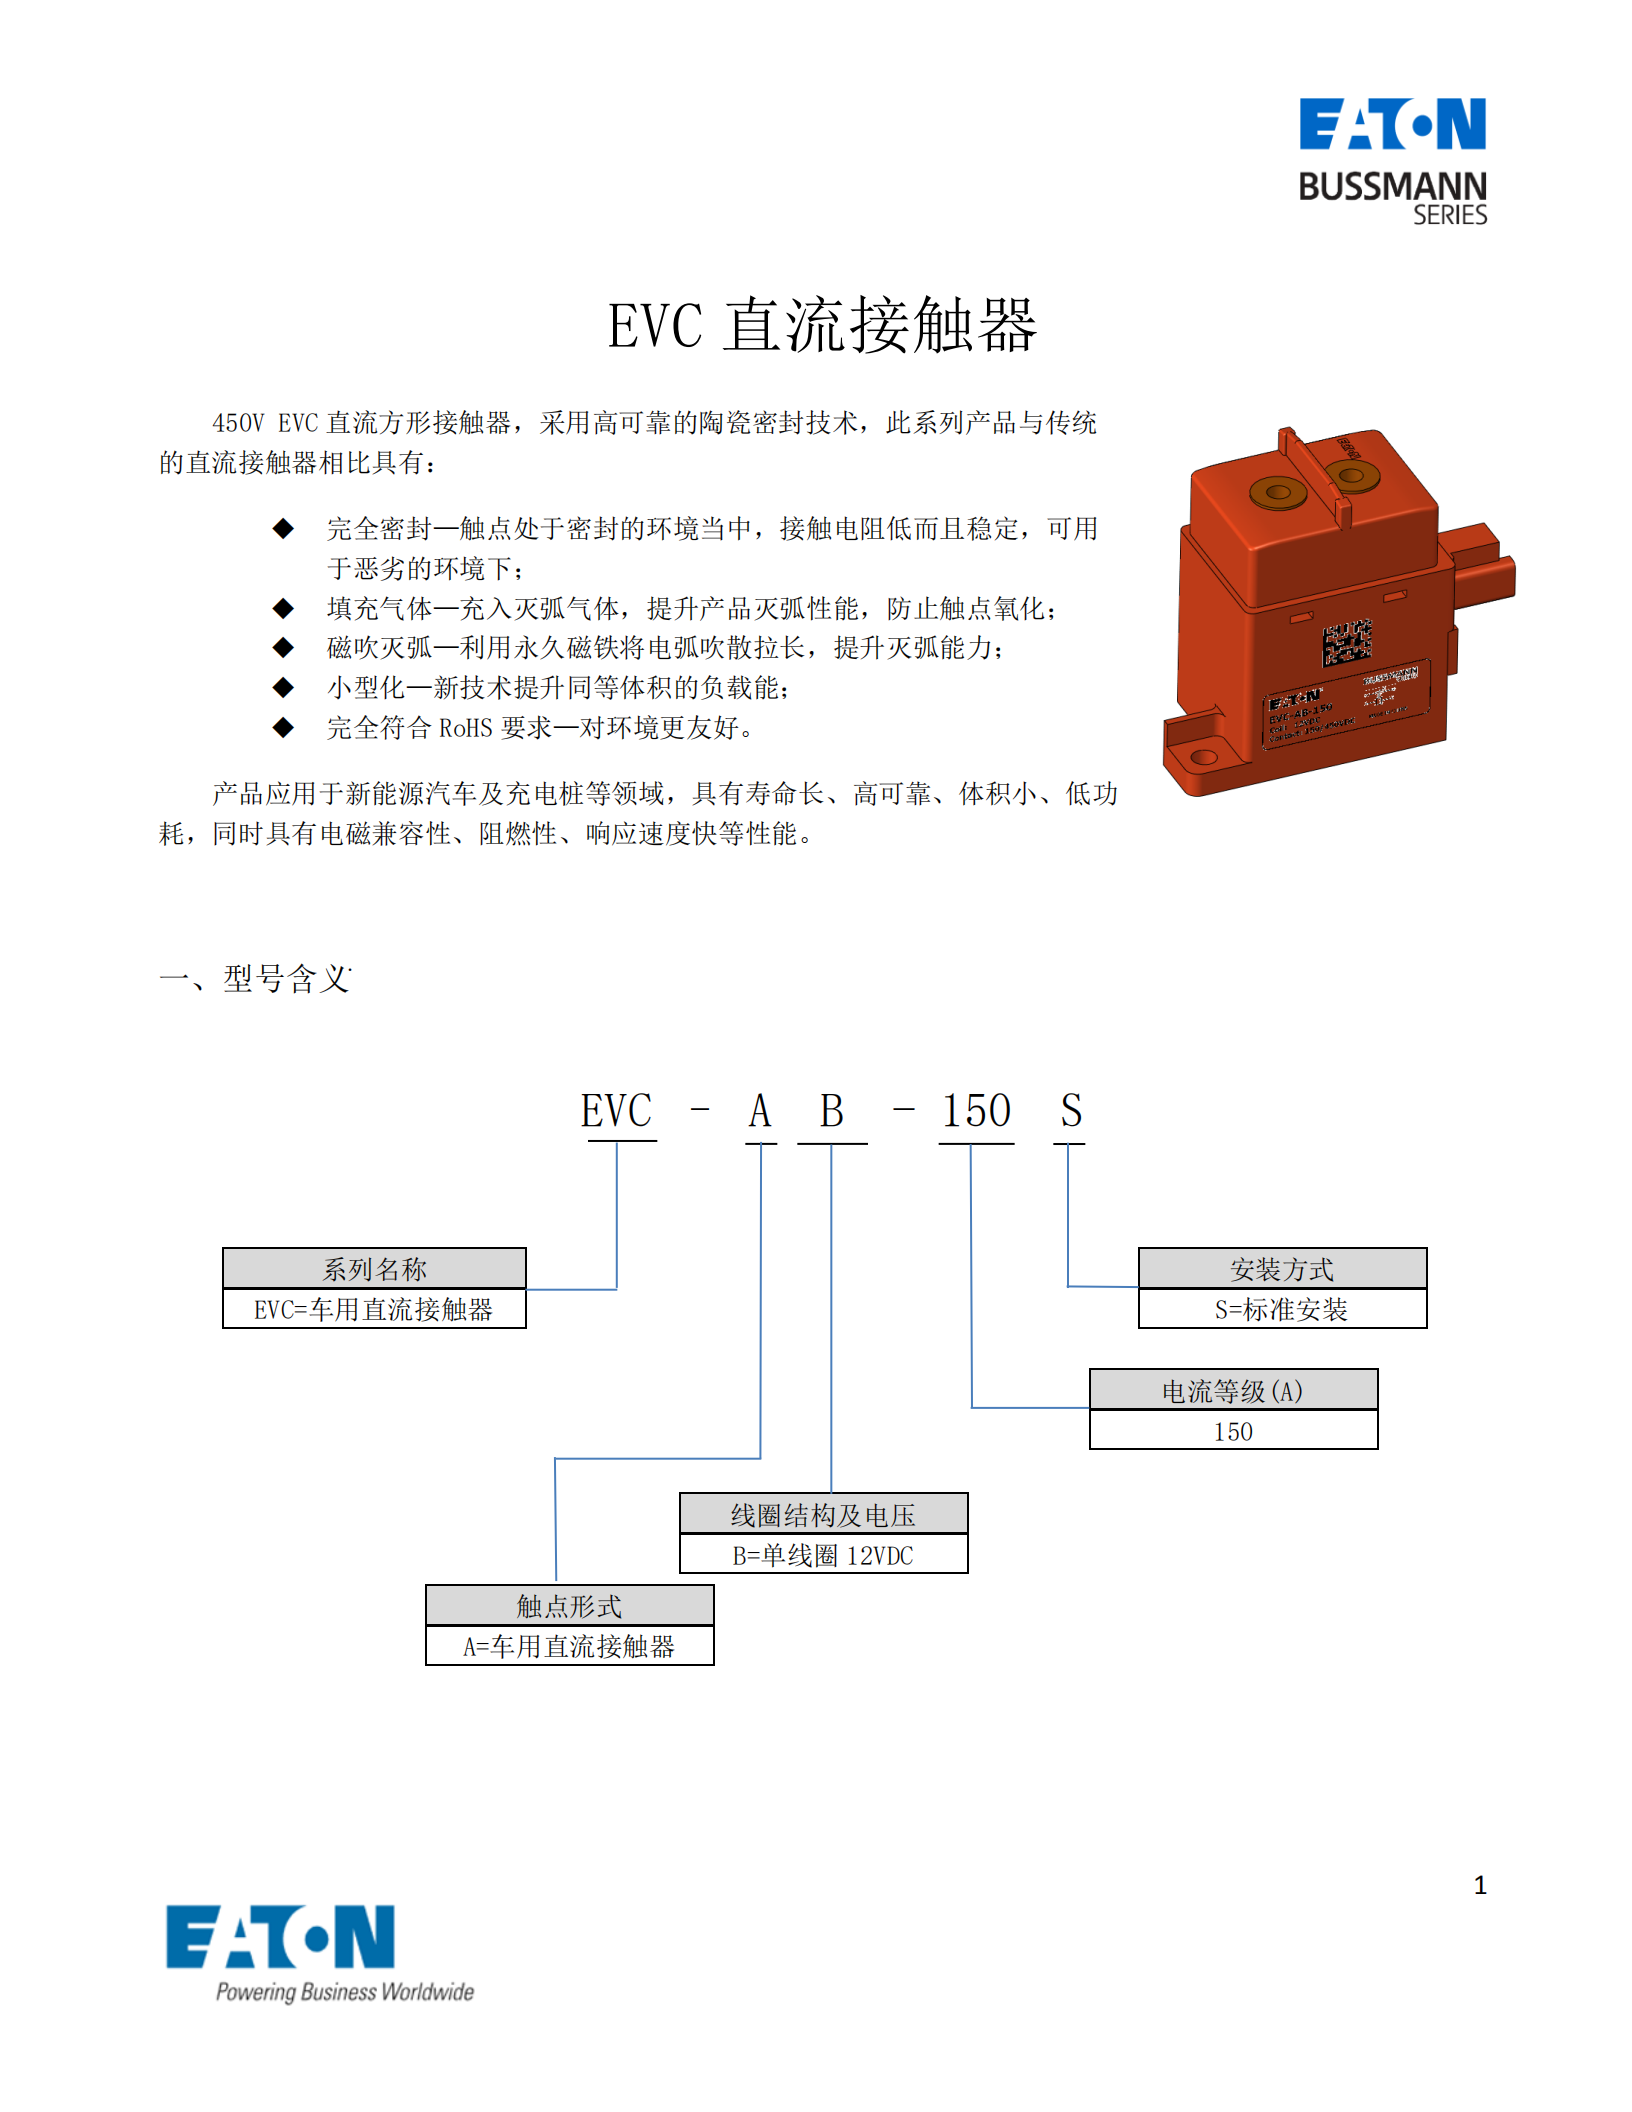 EVC-AB-150S直流接觸器